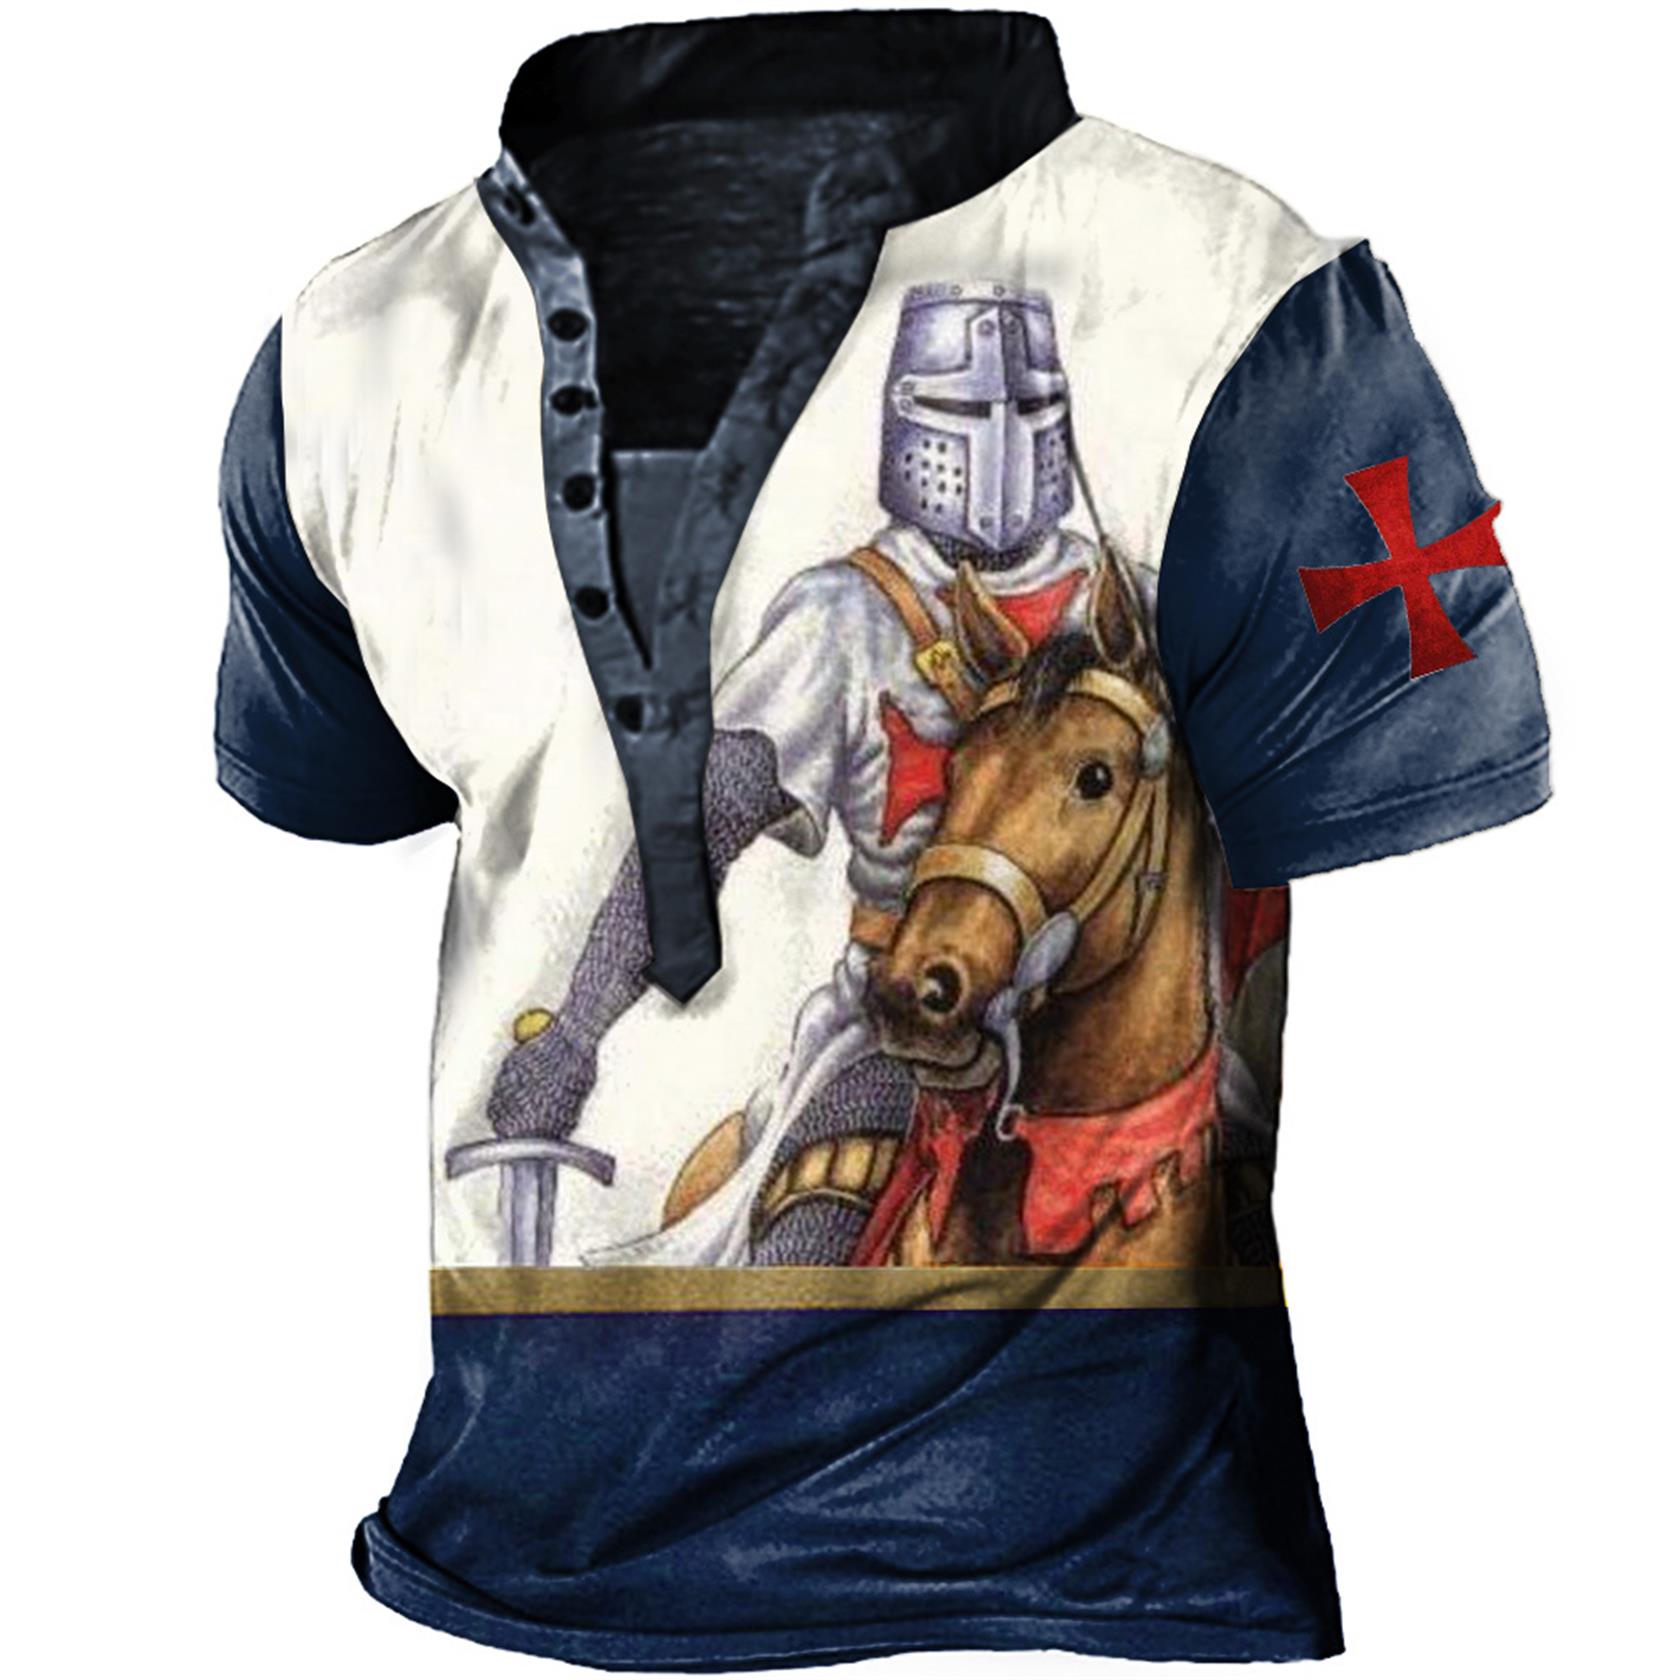 Men's Outdoor Knights Templar Print Chic Henley T-shirt